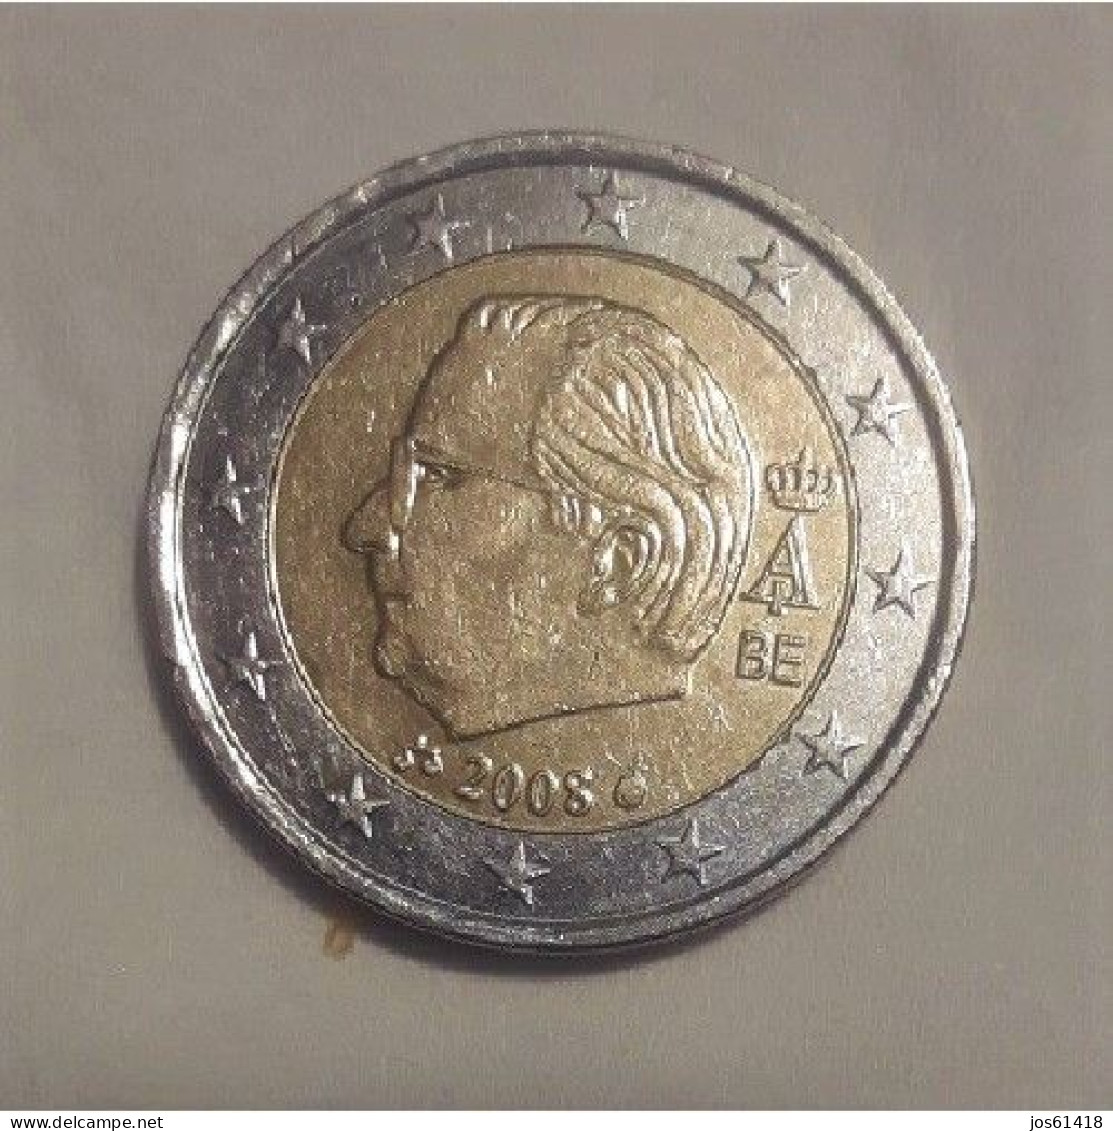 2 Euros Bèlgica / Belgium  2008  BC - Belgique